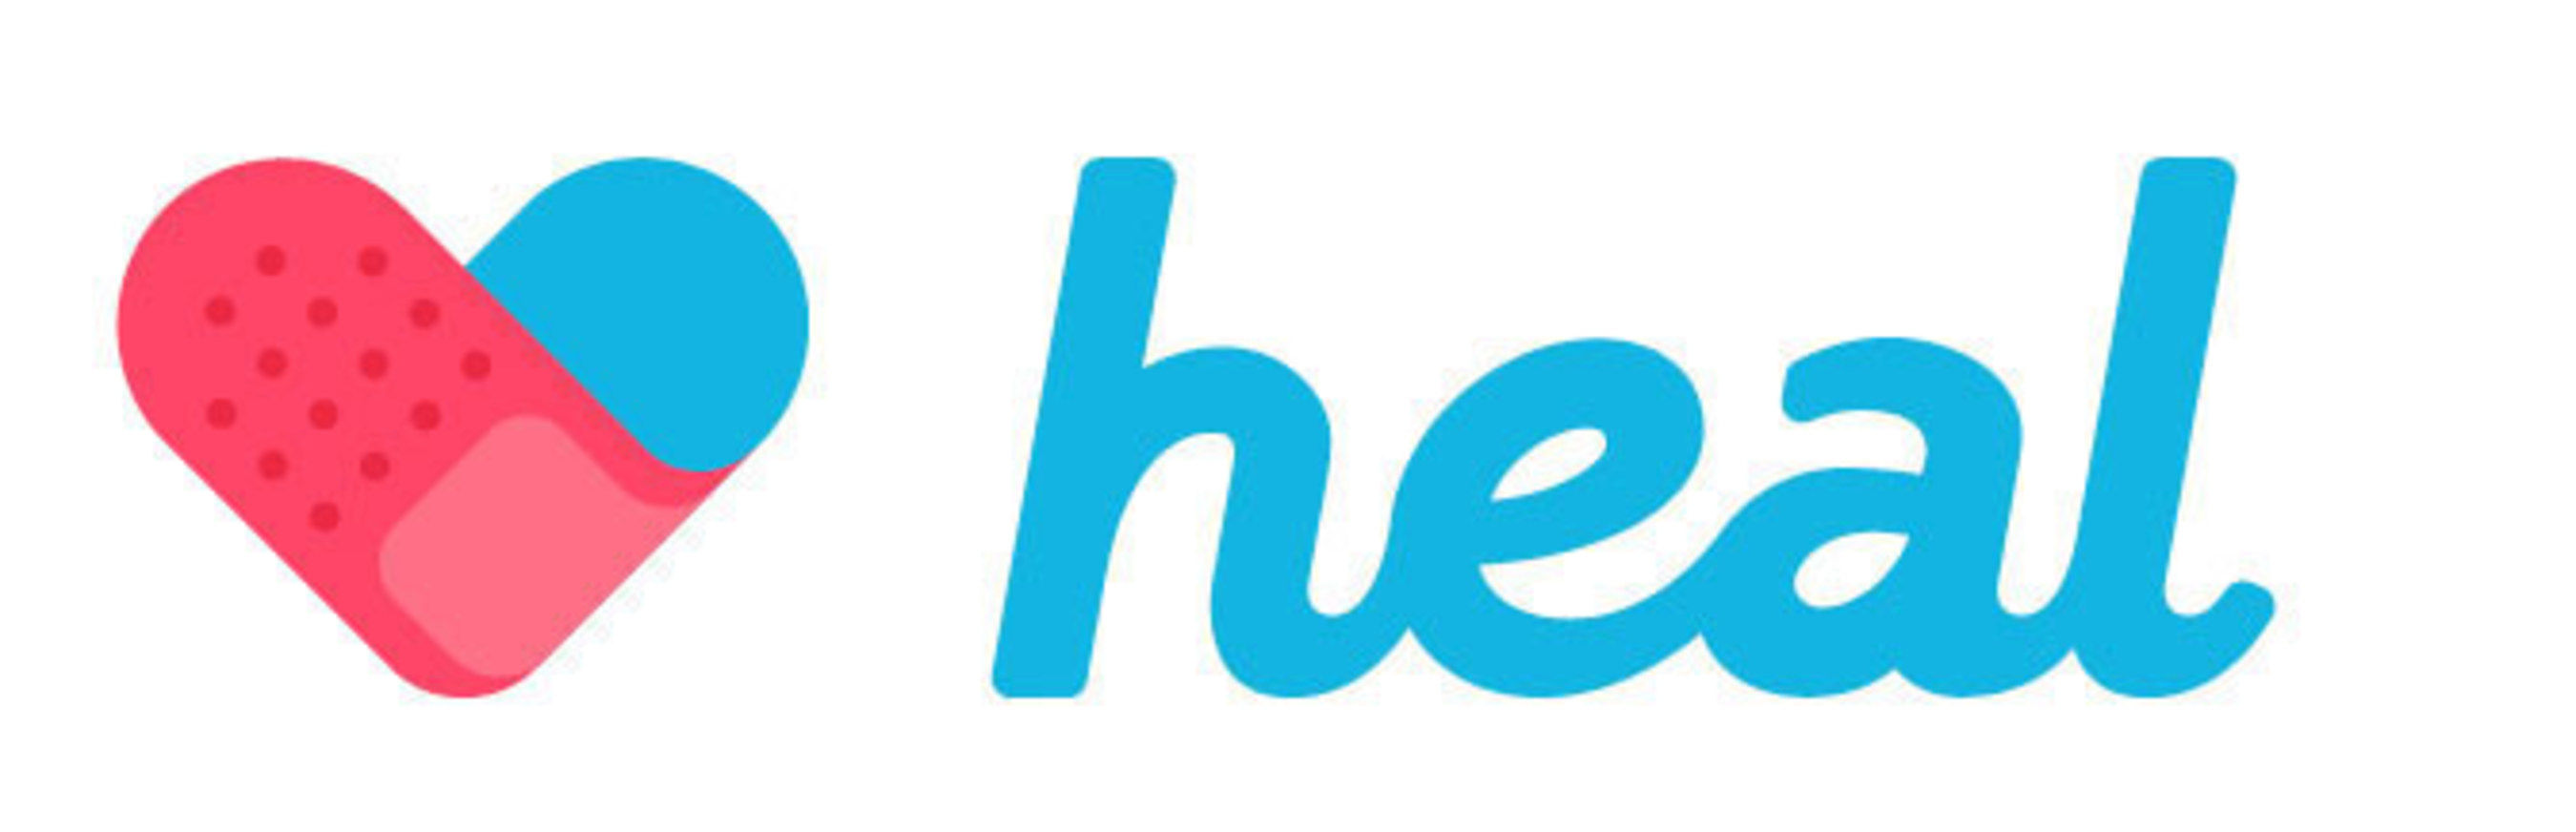 Image result for heal logo